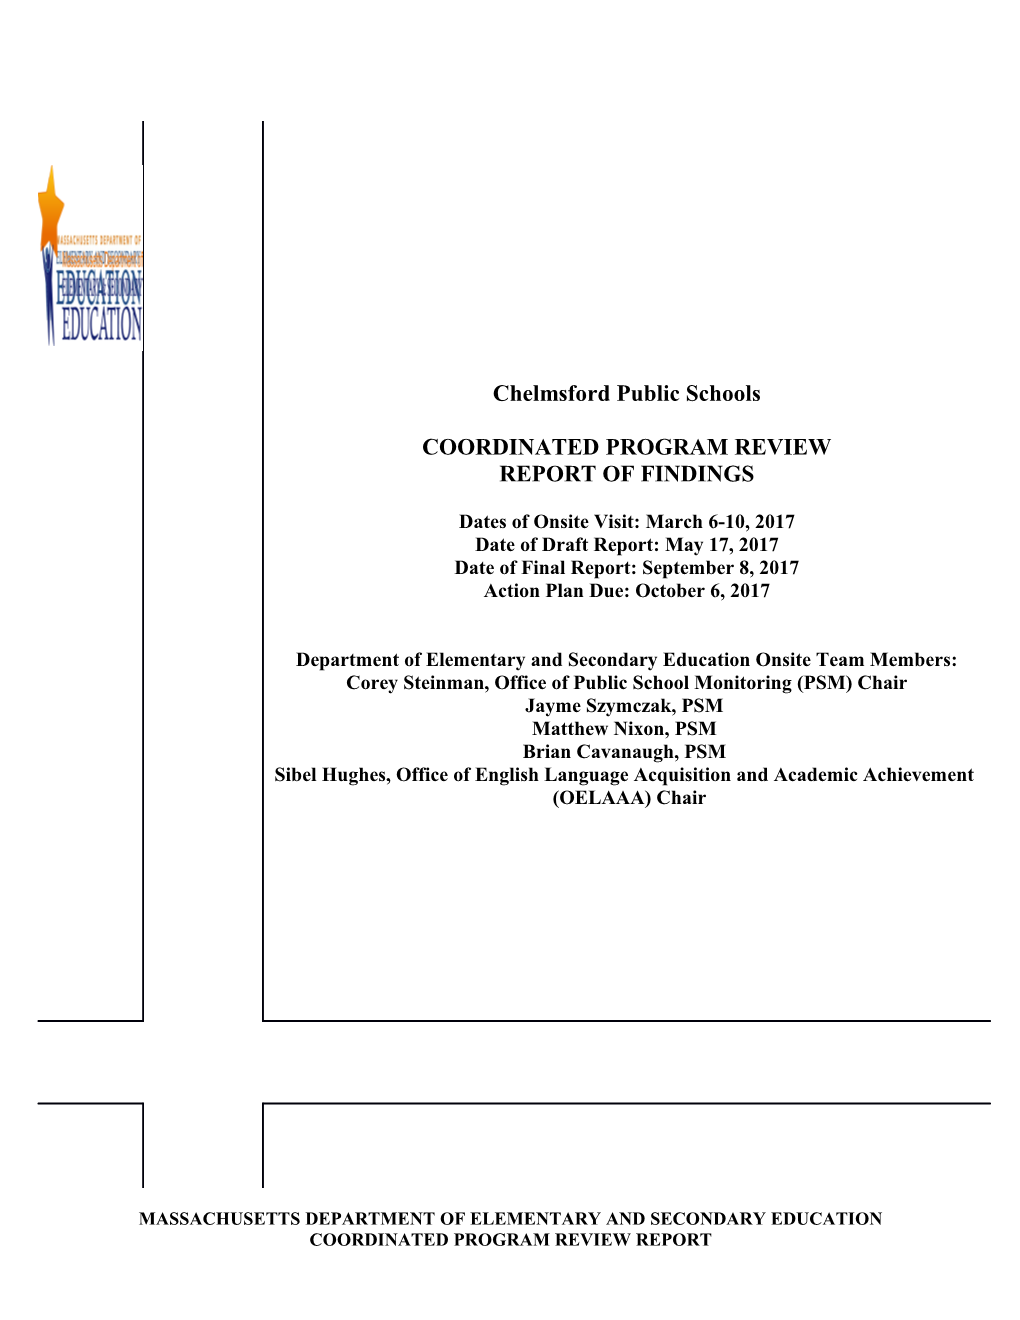 Chelmsford Public Schools CPR Final Report 2017